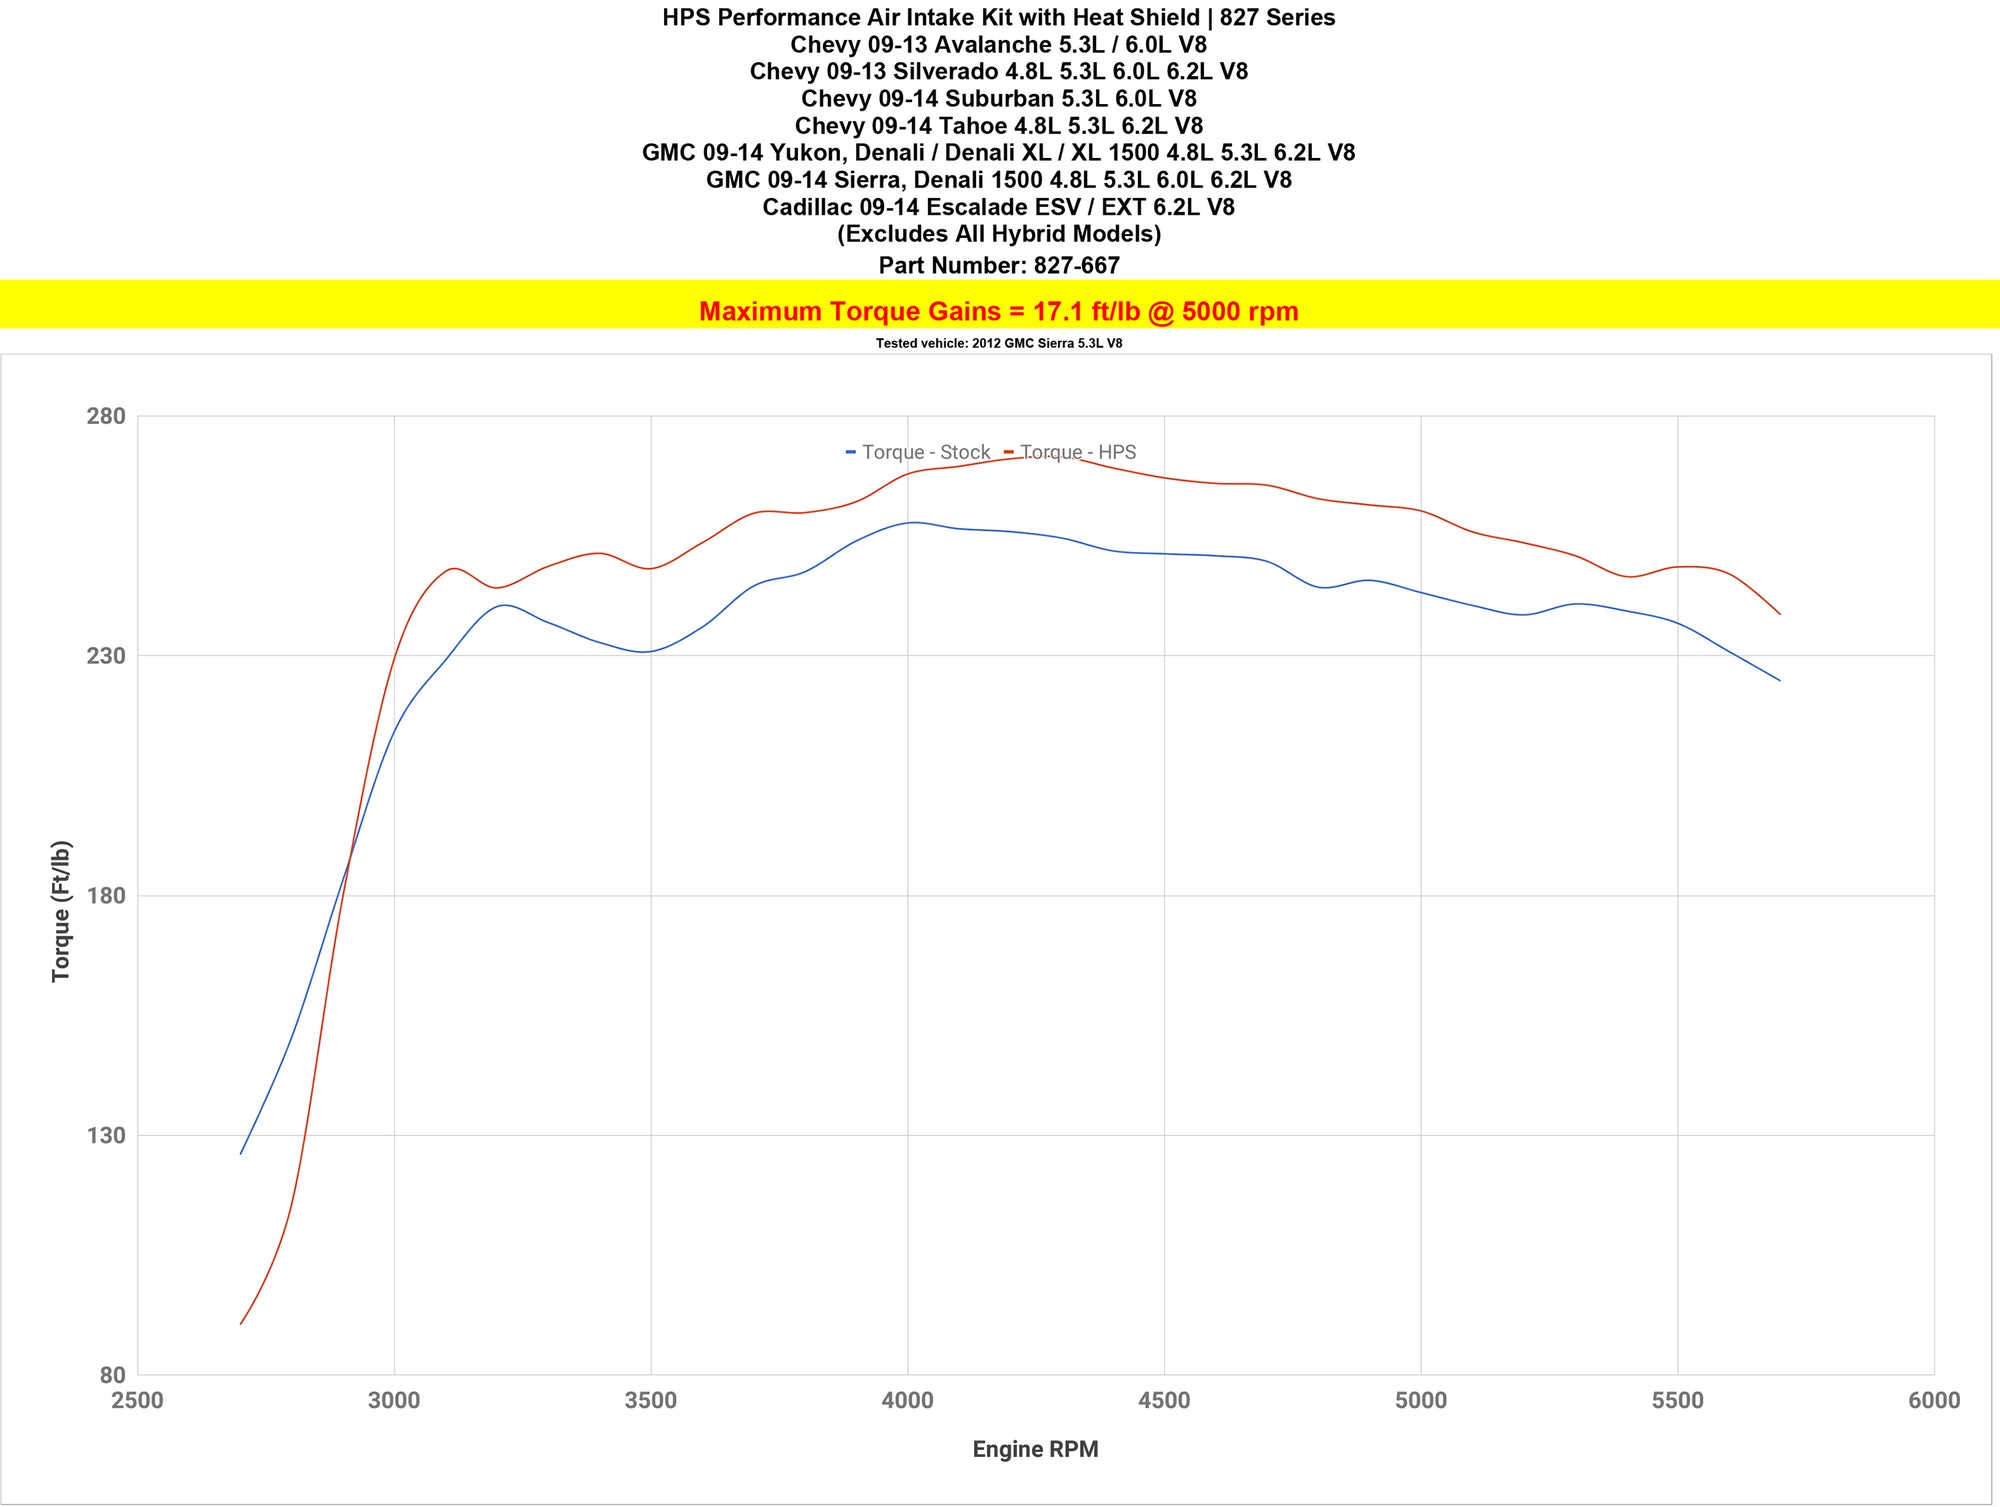 Dyno proven gains 17.1 ft/lb HPS Performance Shortram Air Intake Kit 2009-2014 Cadillac Escalade 6.2L V8 827-667P